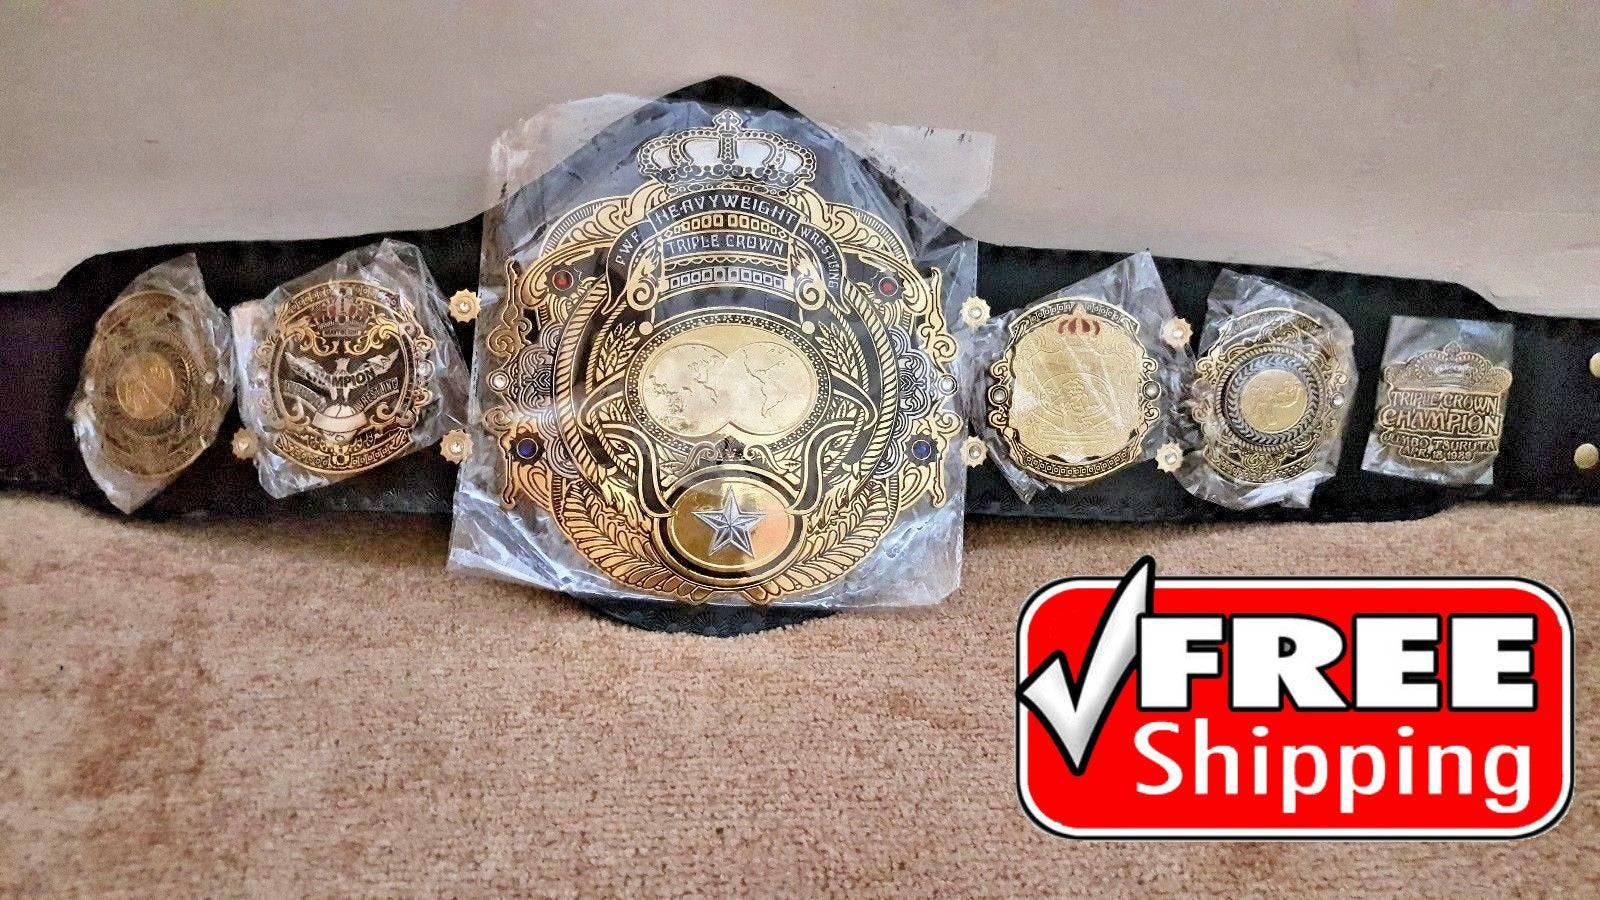 TRIPLE CROWN HEAVYWEIGHT Championship Belt